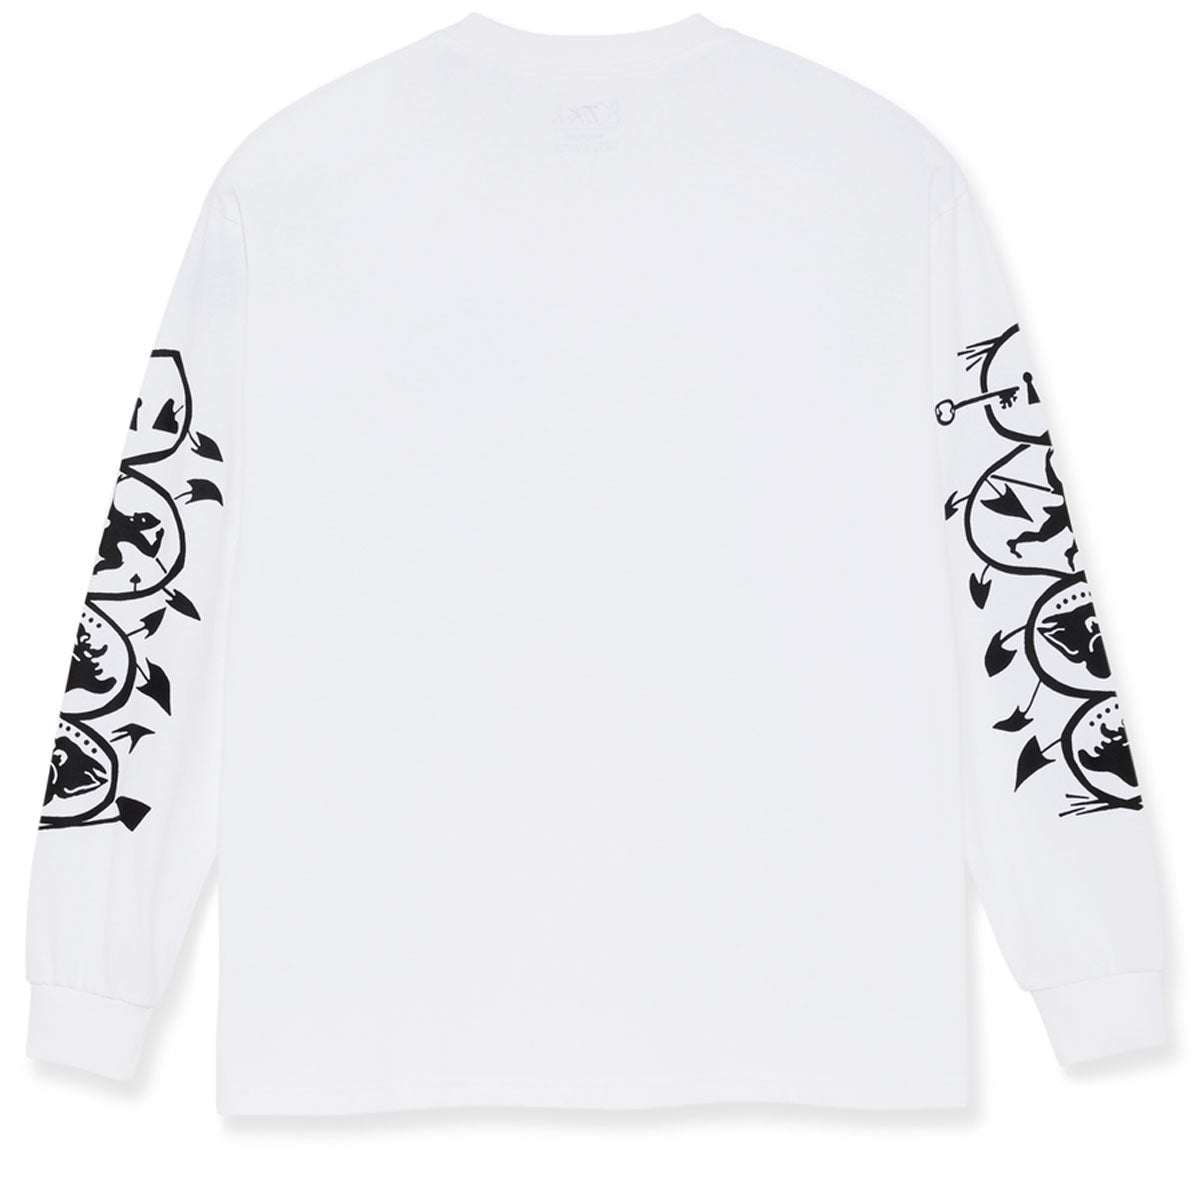 Polar Spiral Long Sleeve T-Shirt - White image 2